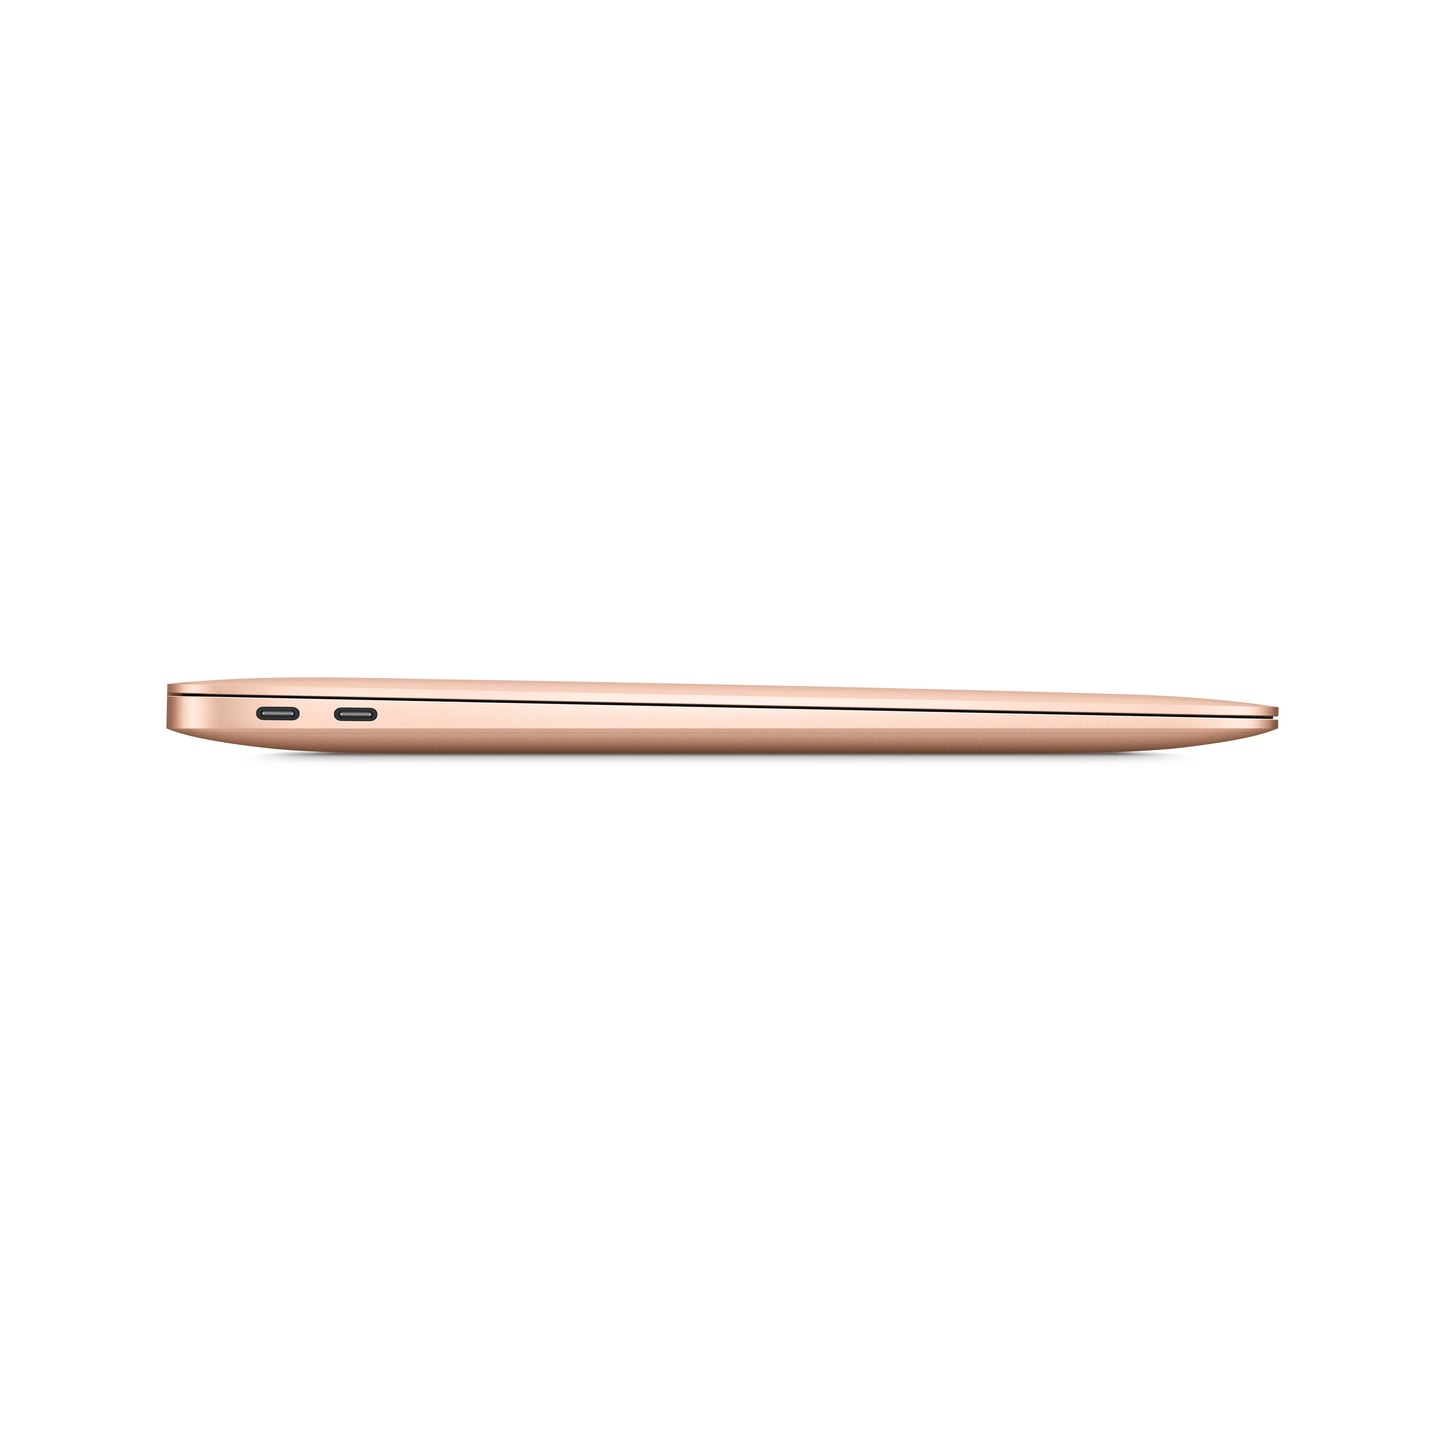 13-inch MacBook Air: Apple M1 chip with 8-core CPU and 7-core GPU, 256GB - Gold